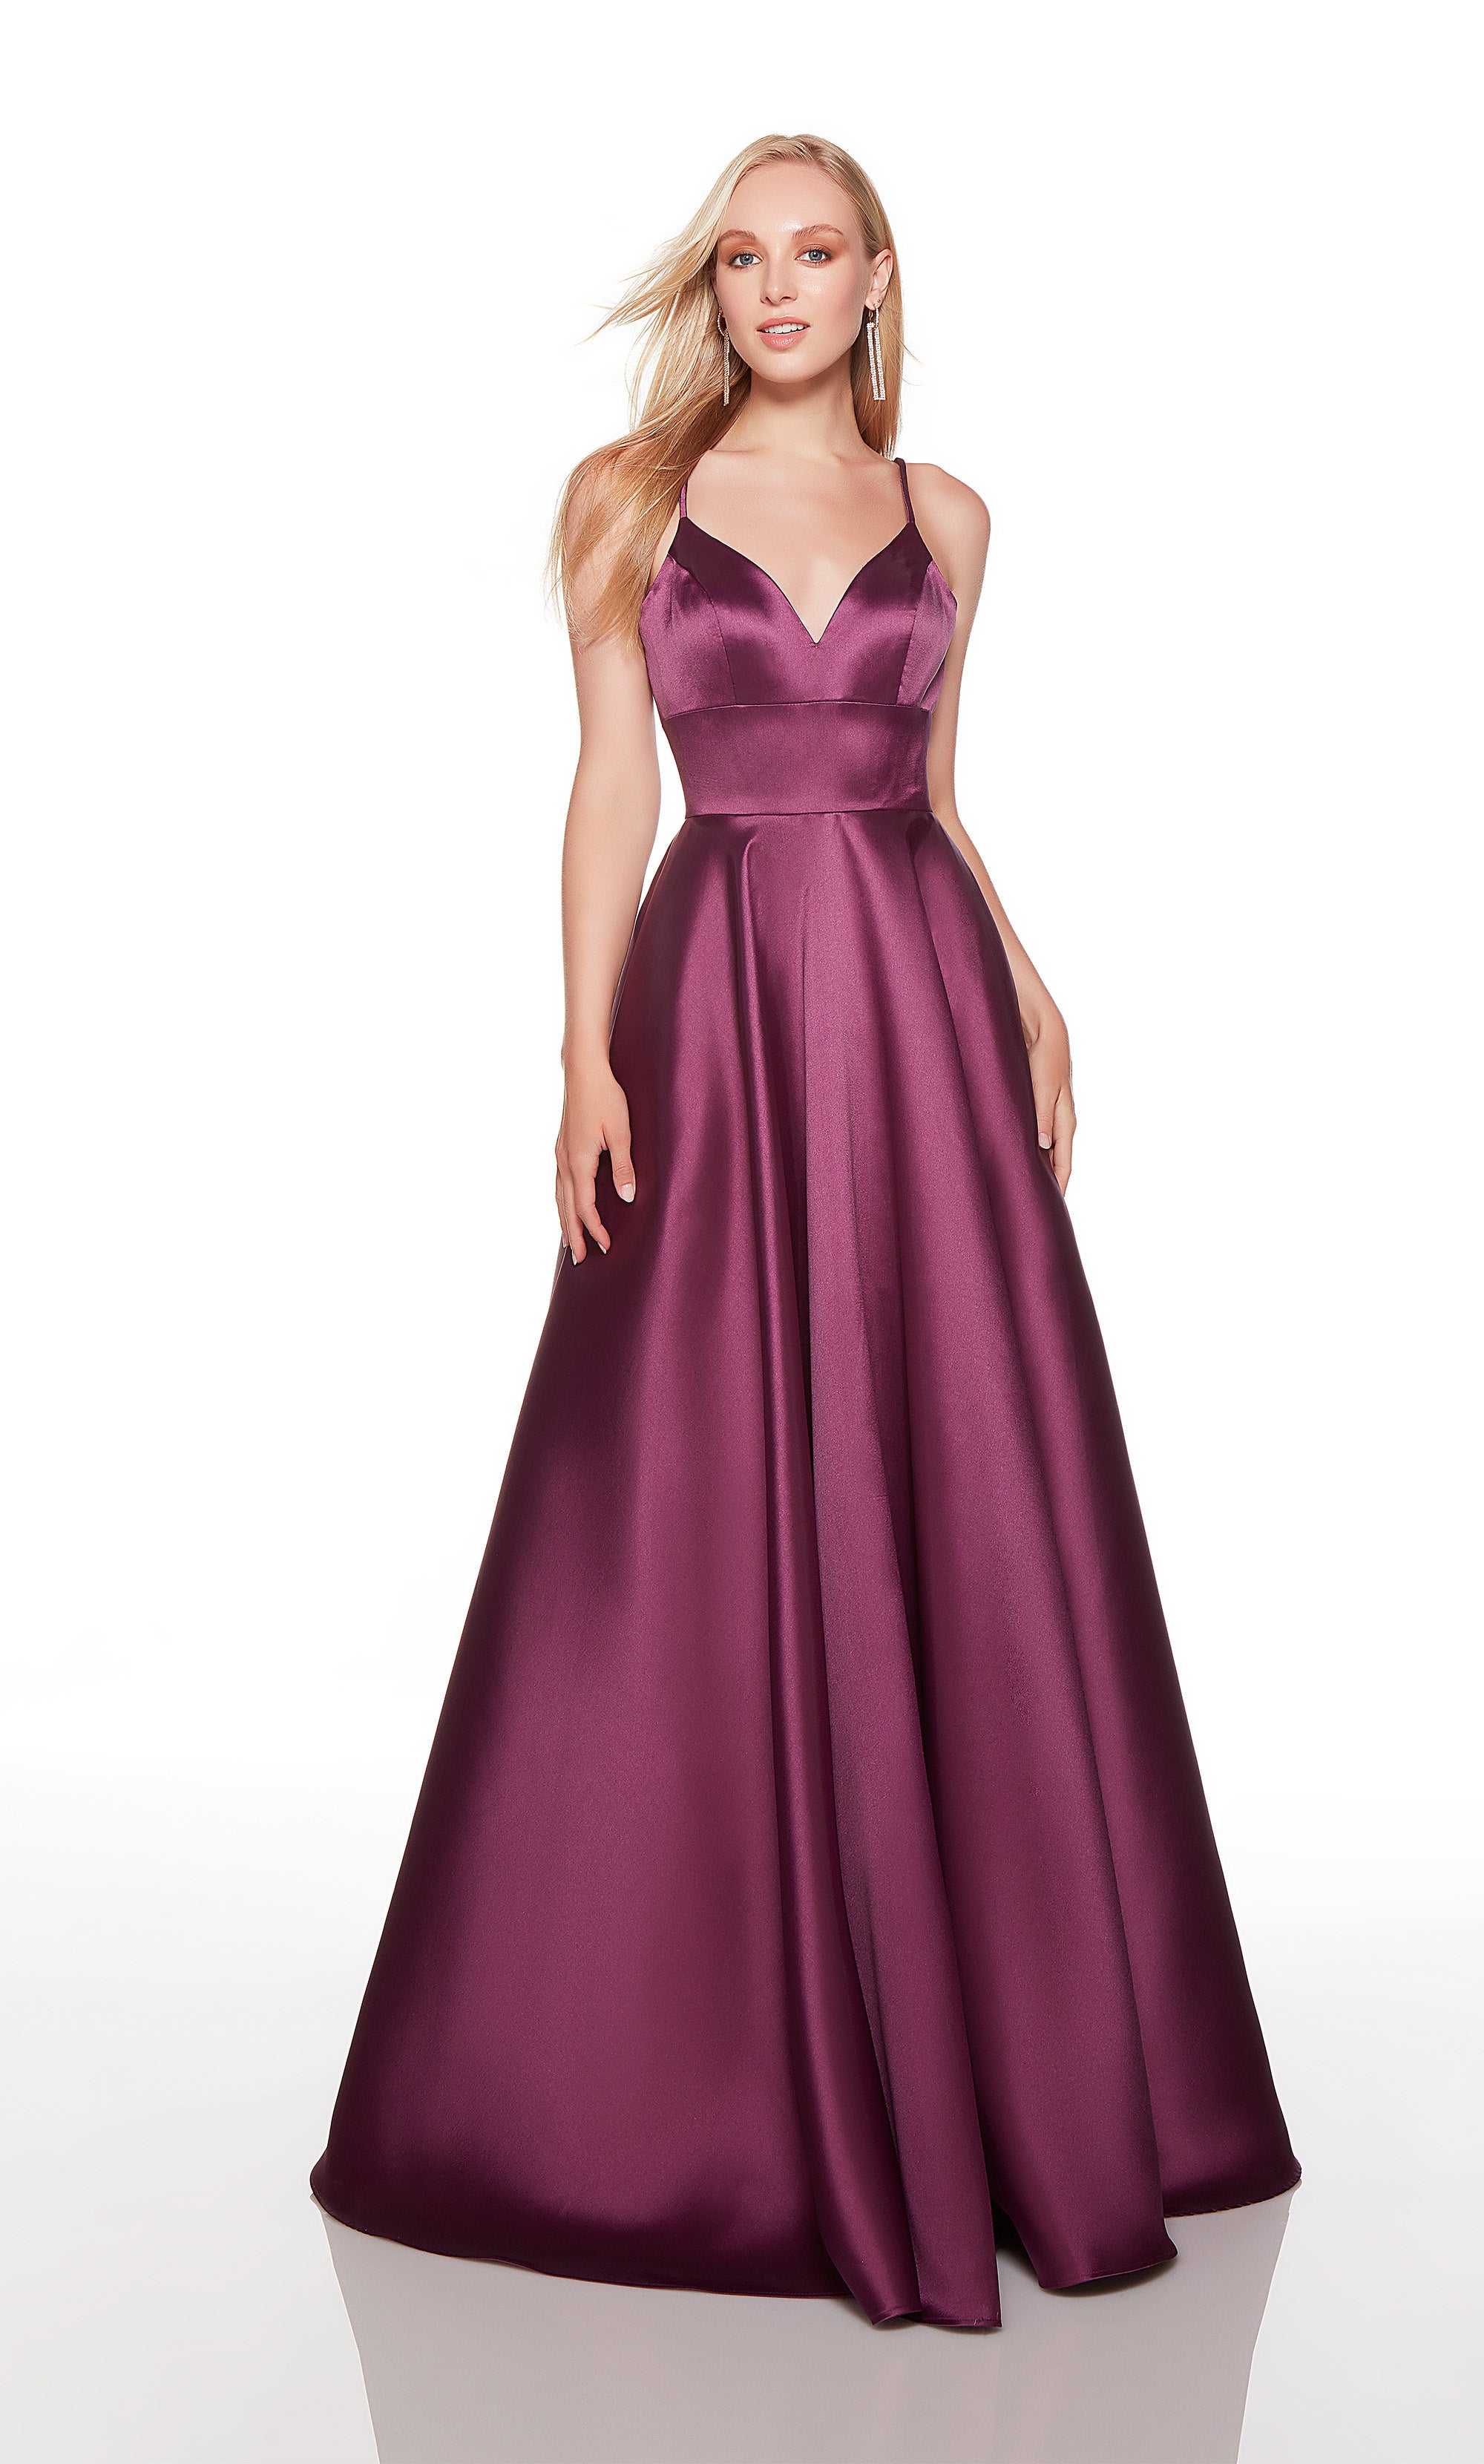 Infinity dress - plum color convertible dress - long tie dress - brides -  Afrikrea